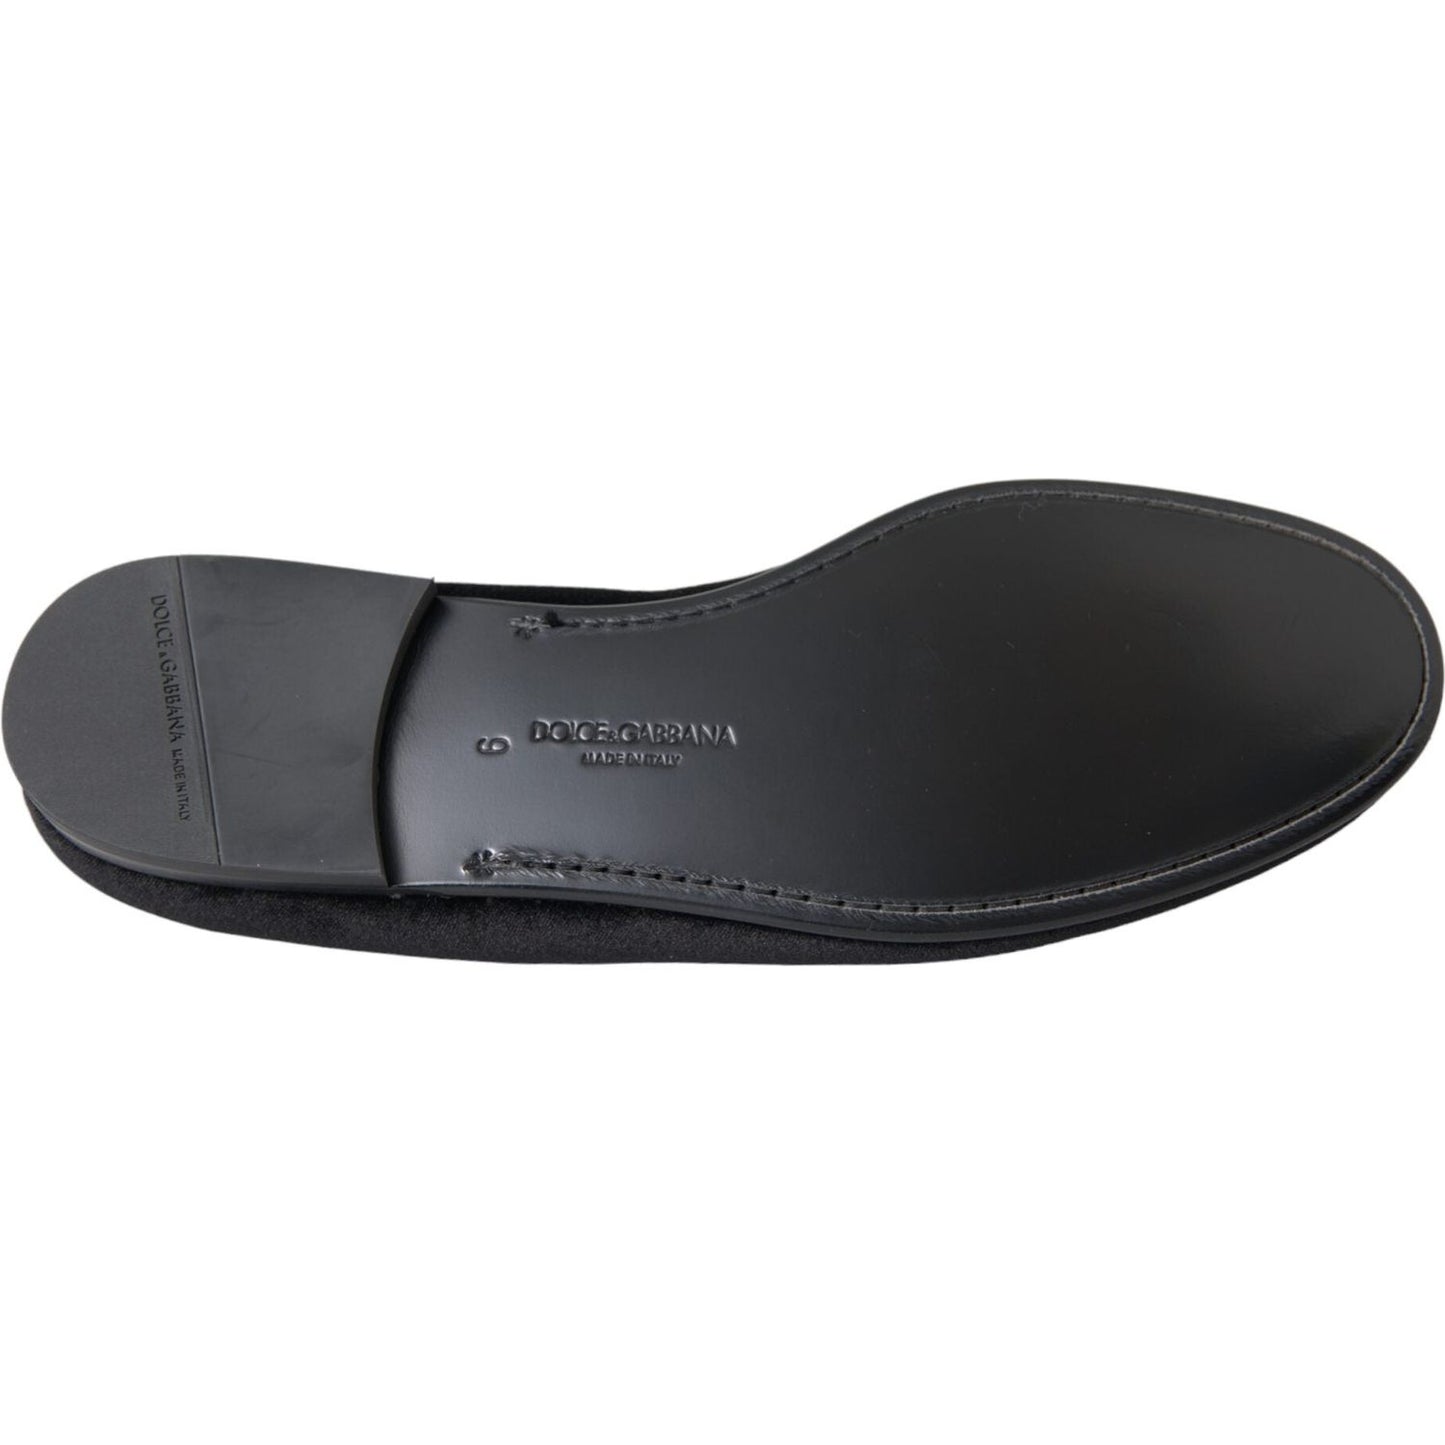 Black Suede Loafers Formal Dress Slip On Shoes Dolce & Gabbana